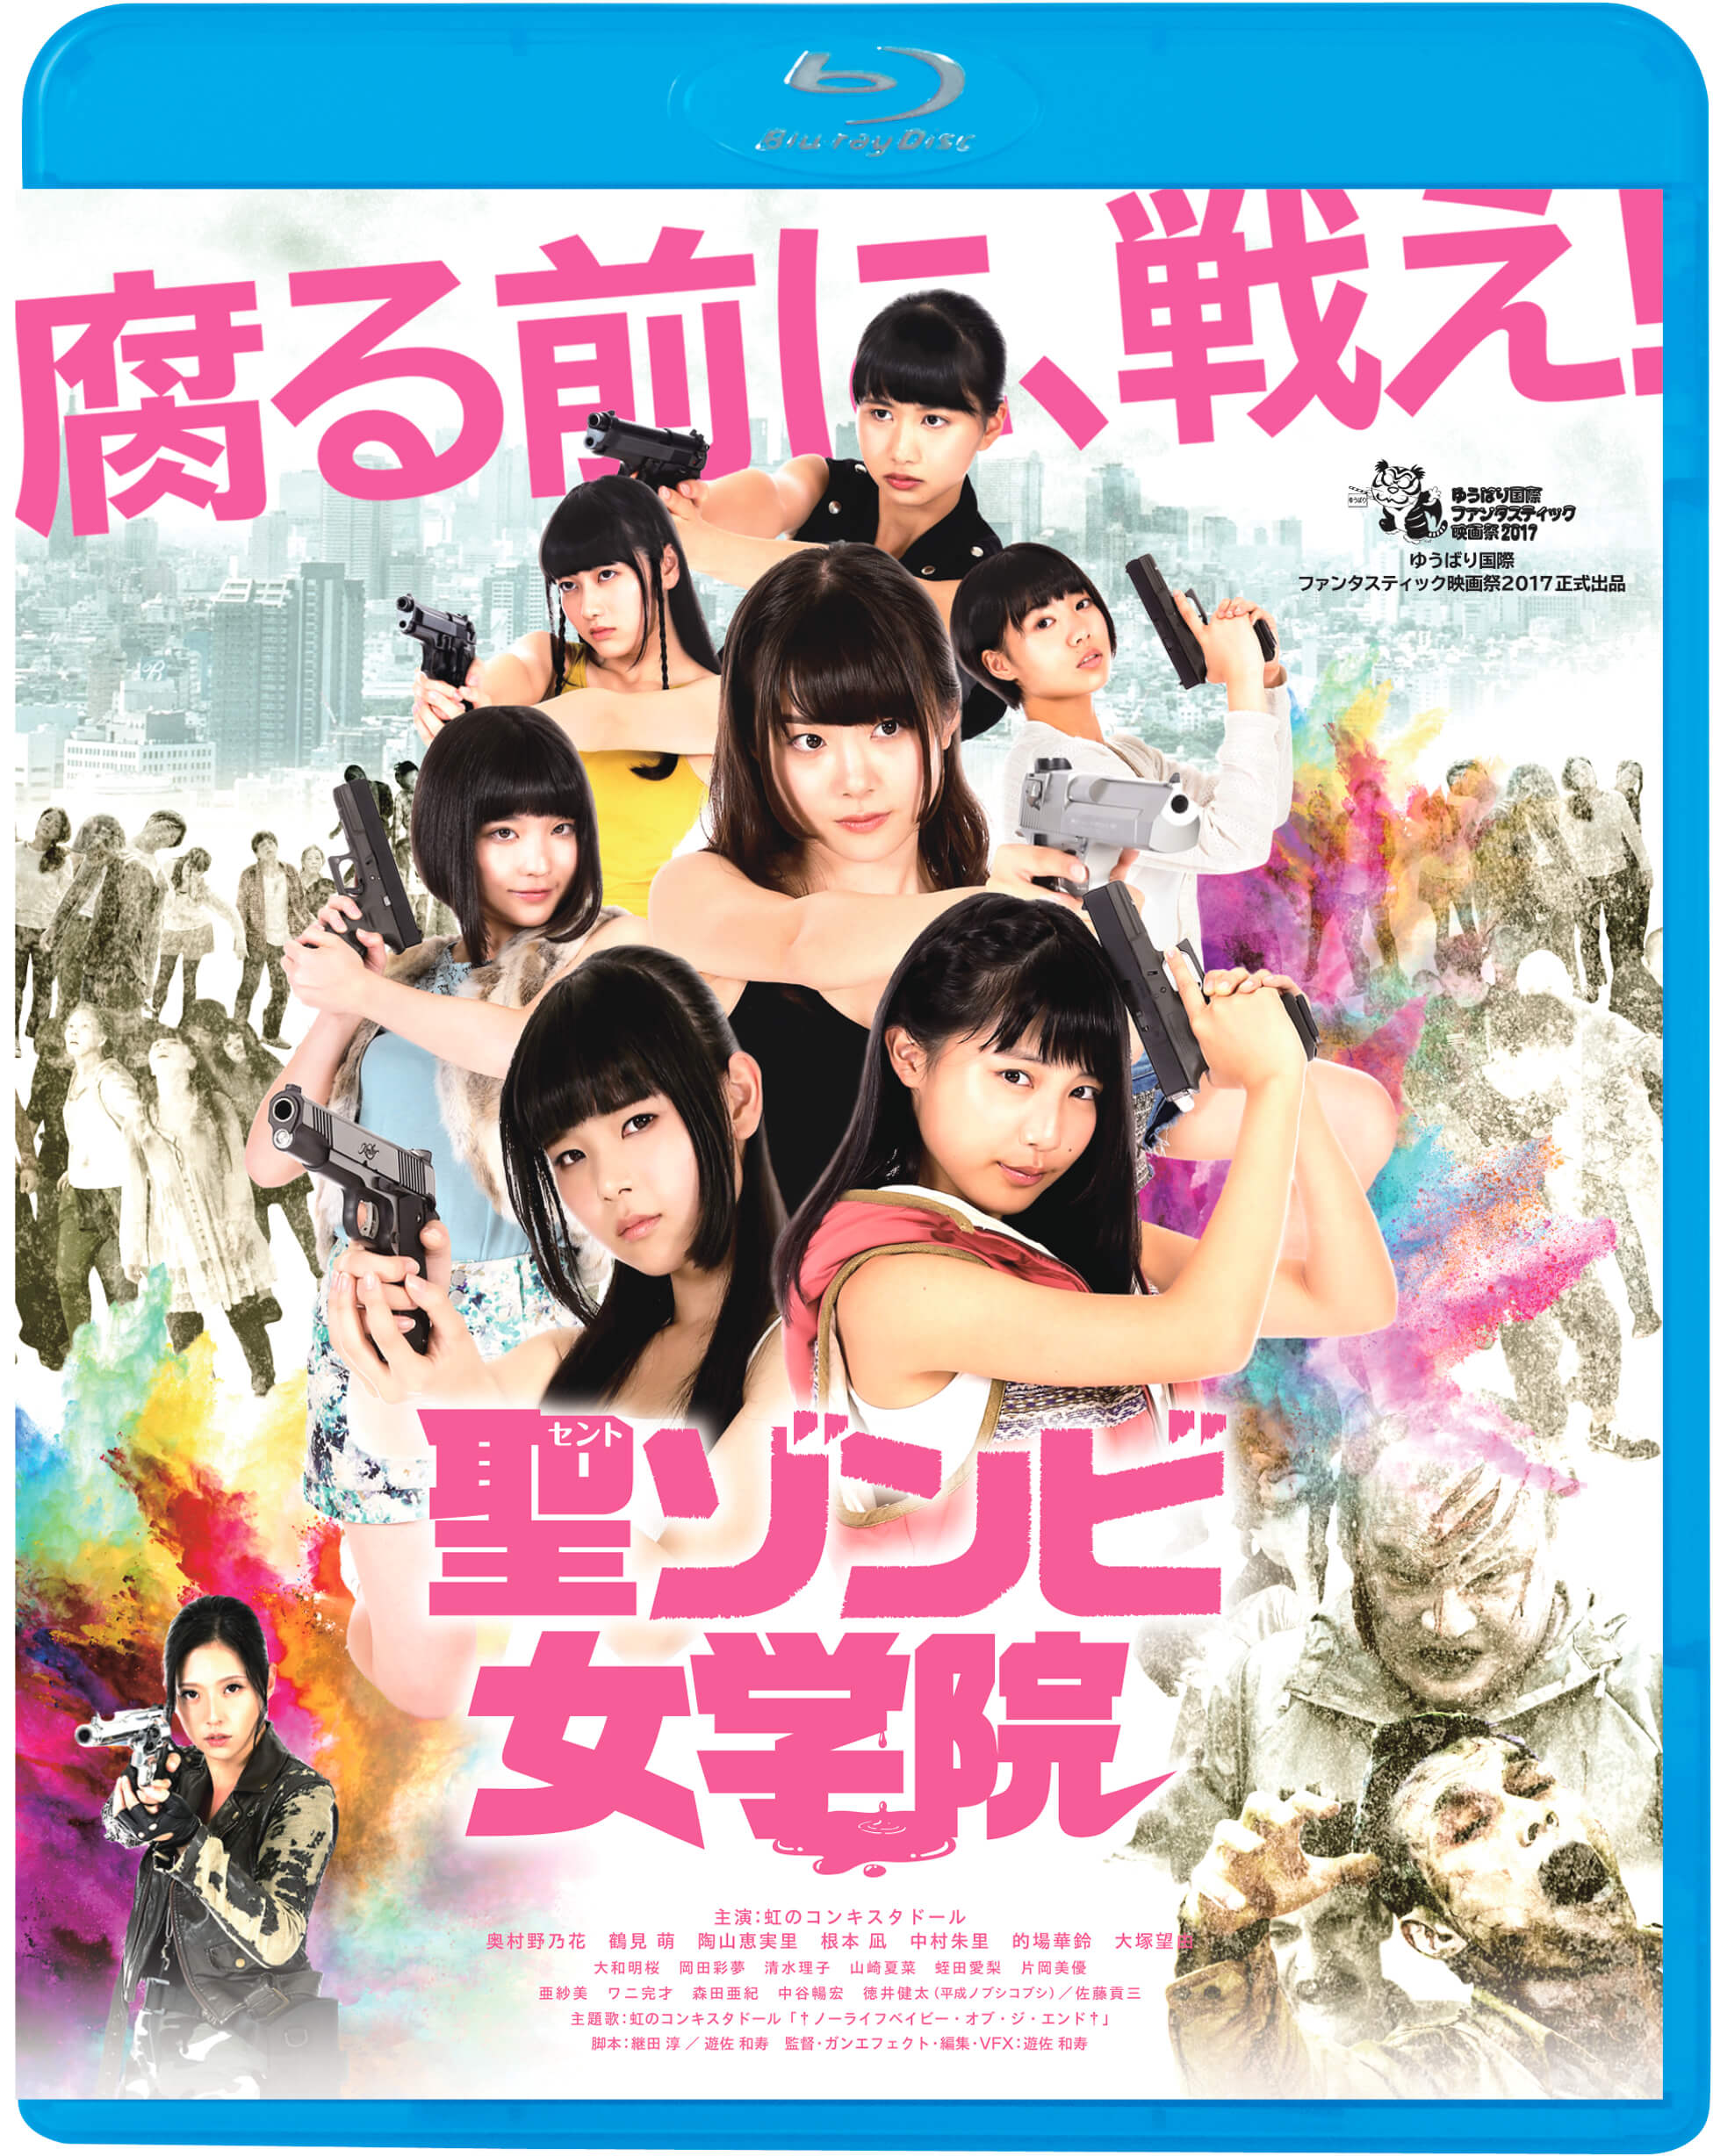 Blu-ray image